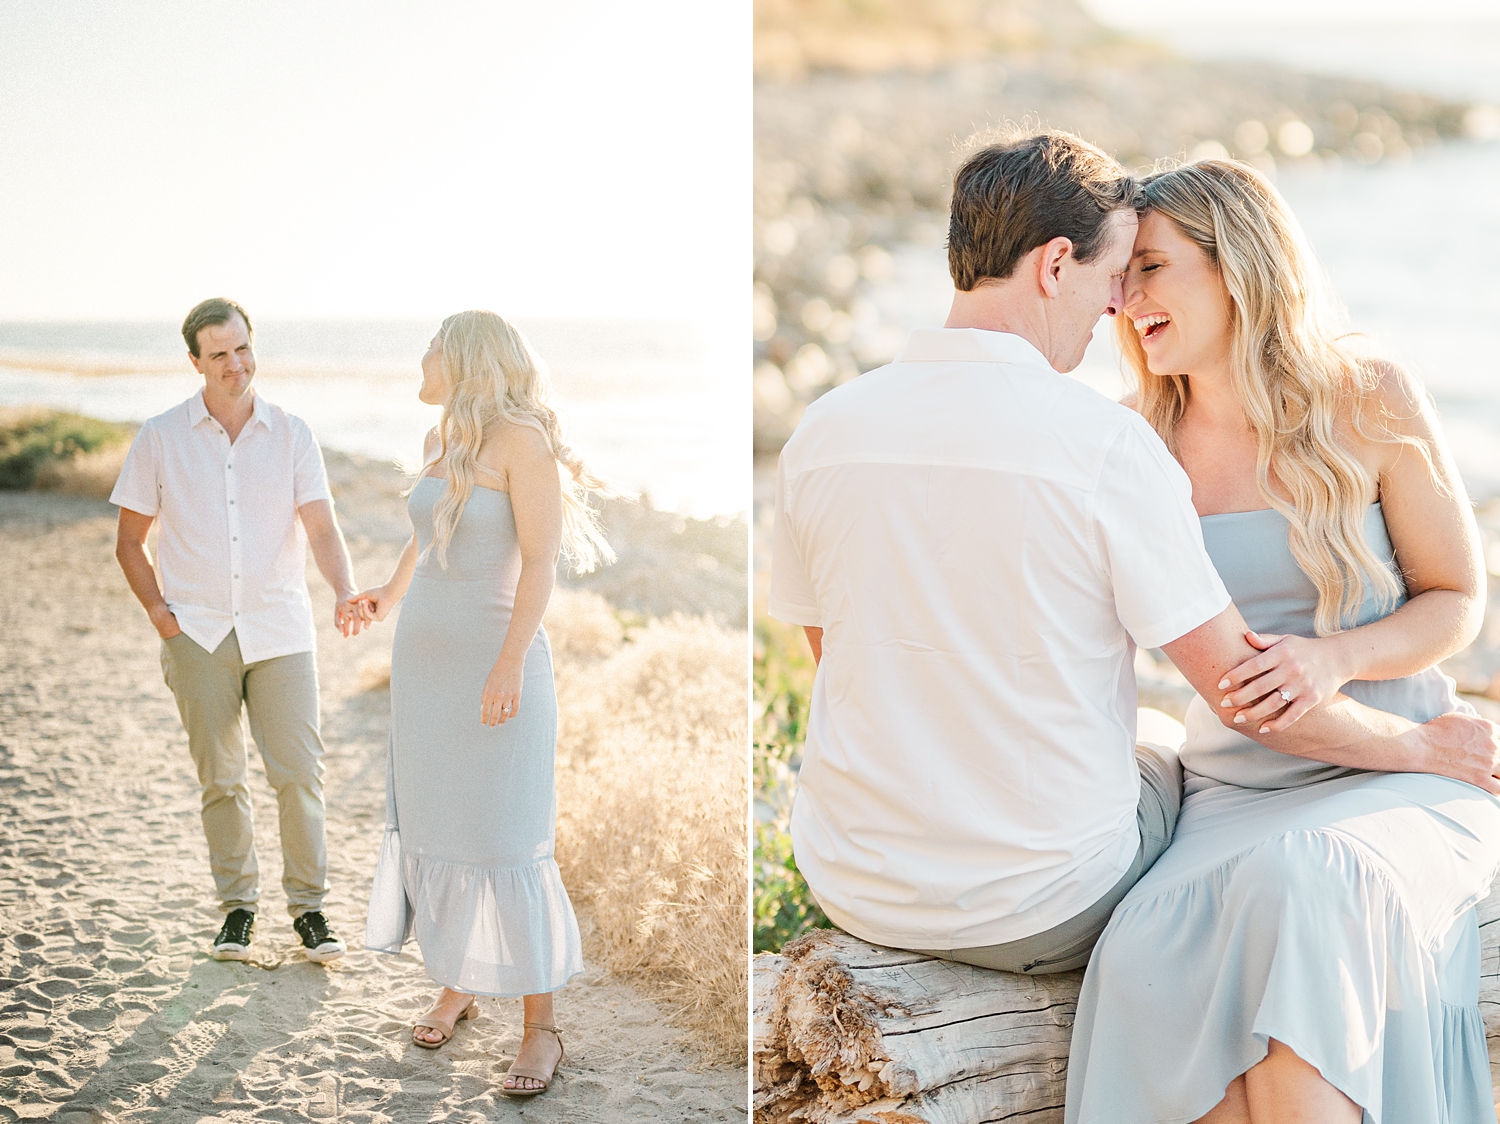 Nataly Hernandez Photography | Palos Verdes Estates Engagement Session | Romantic | Beach | Sunset | Film | Editorial | Fine Art Wedding Photographer -59.jpg